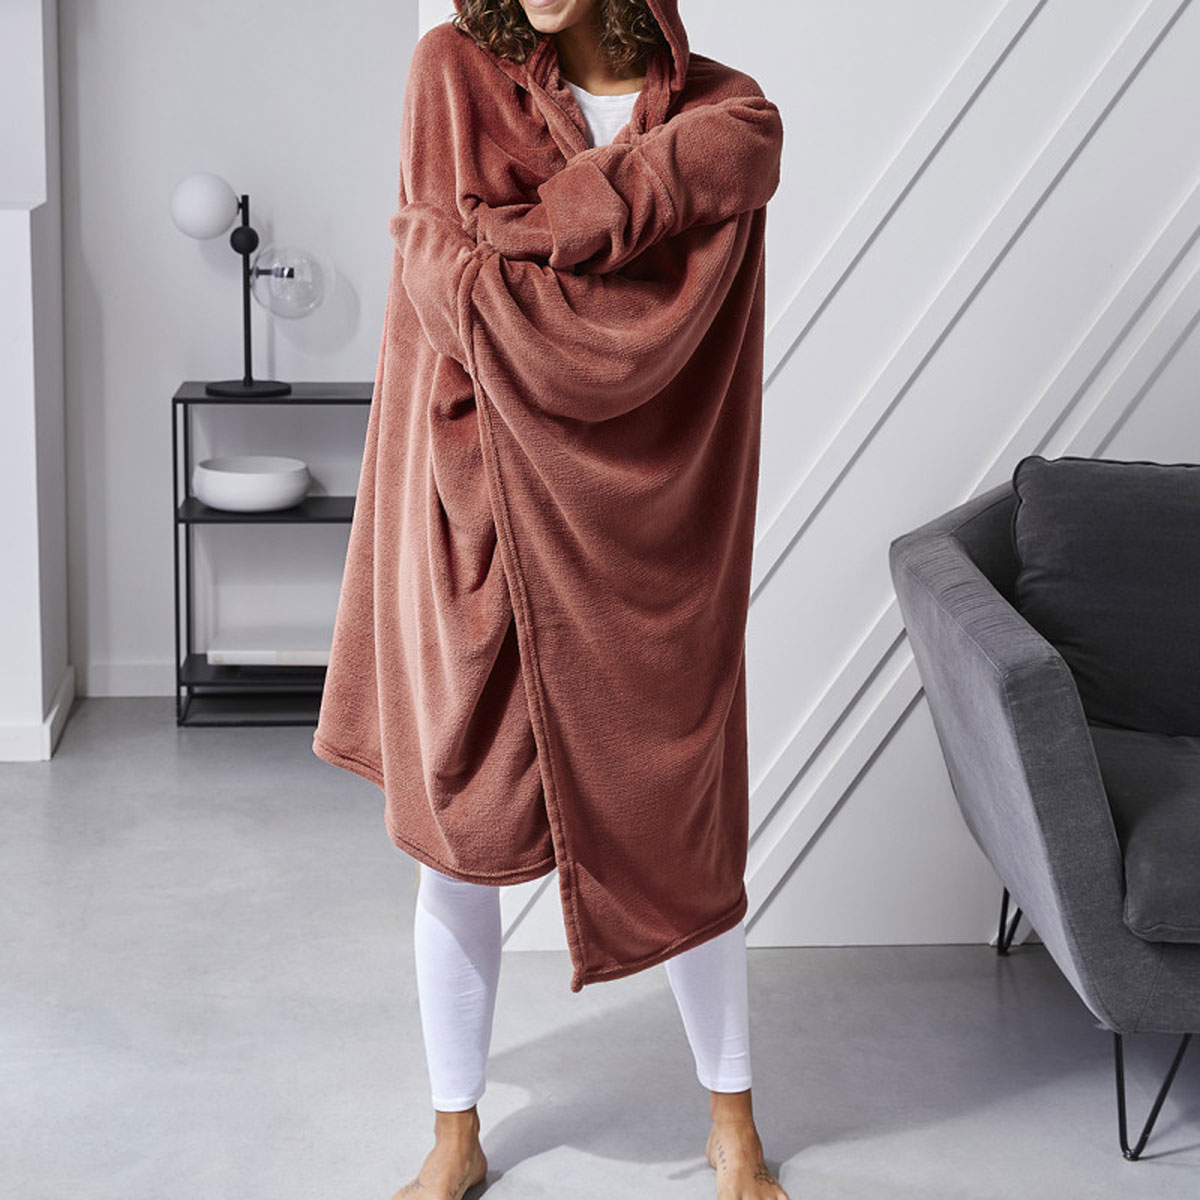 Very soft hooded blanket 115 x 165 cm